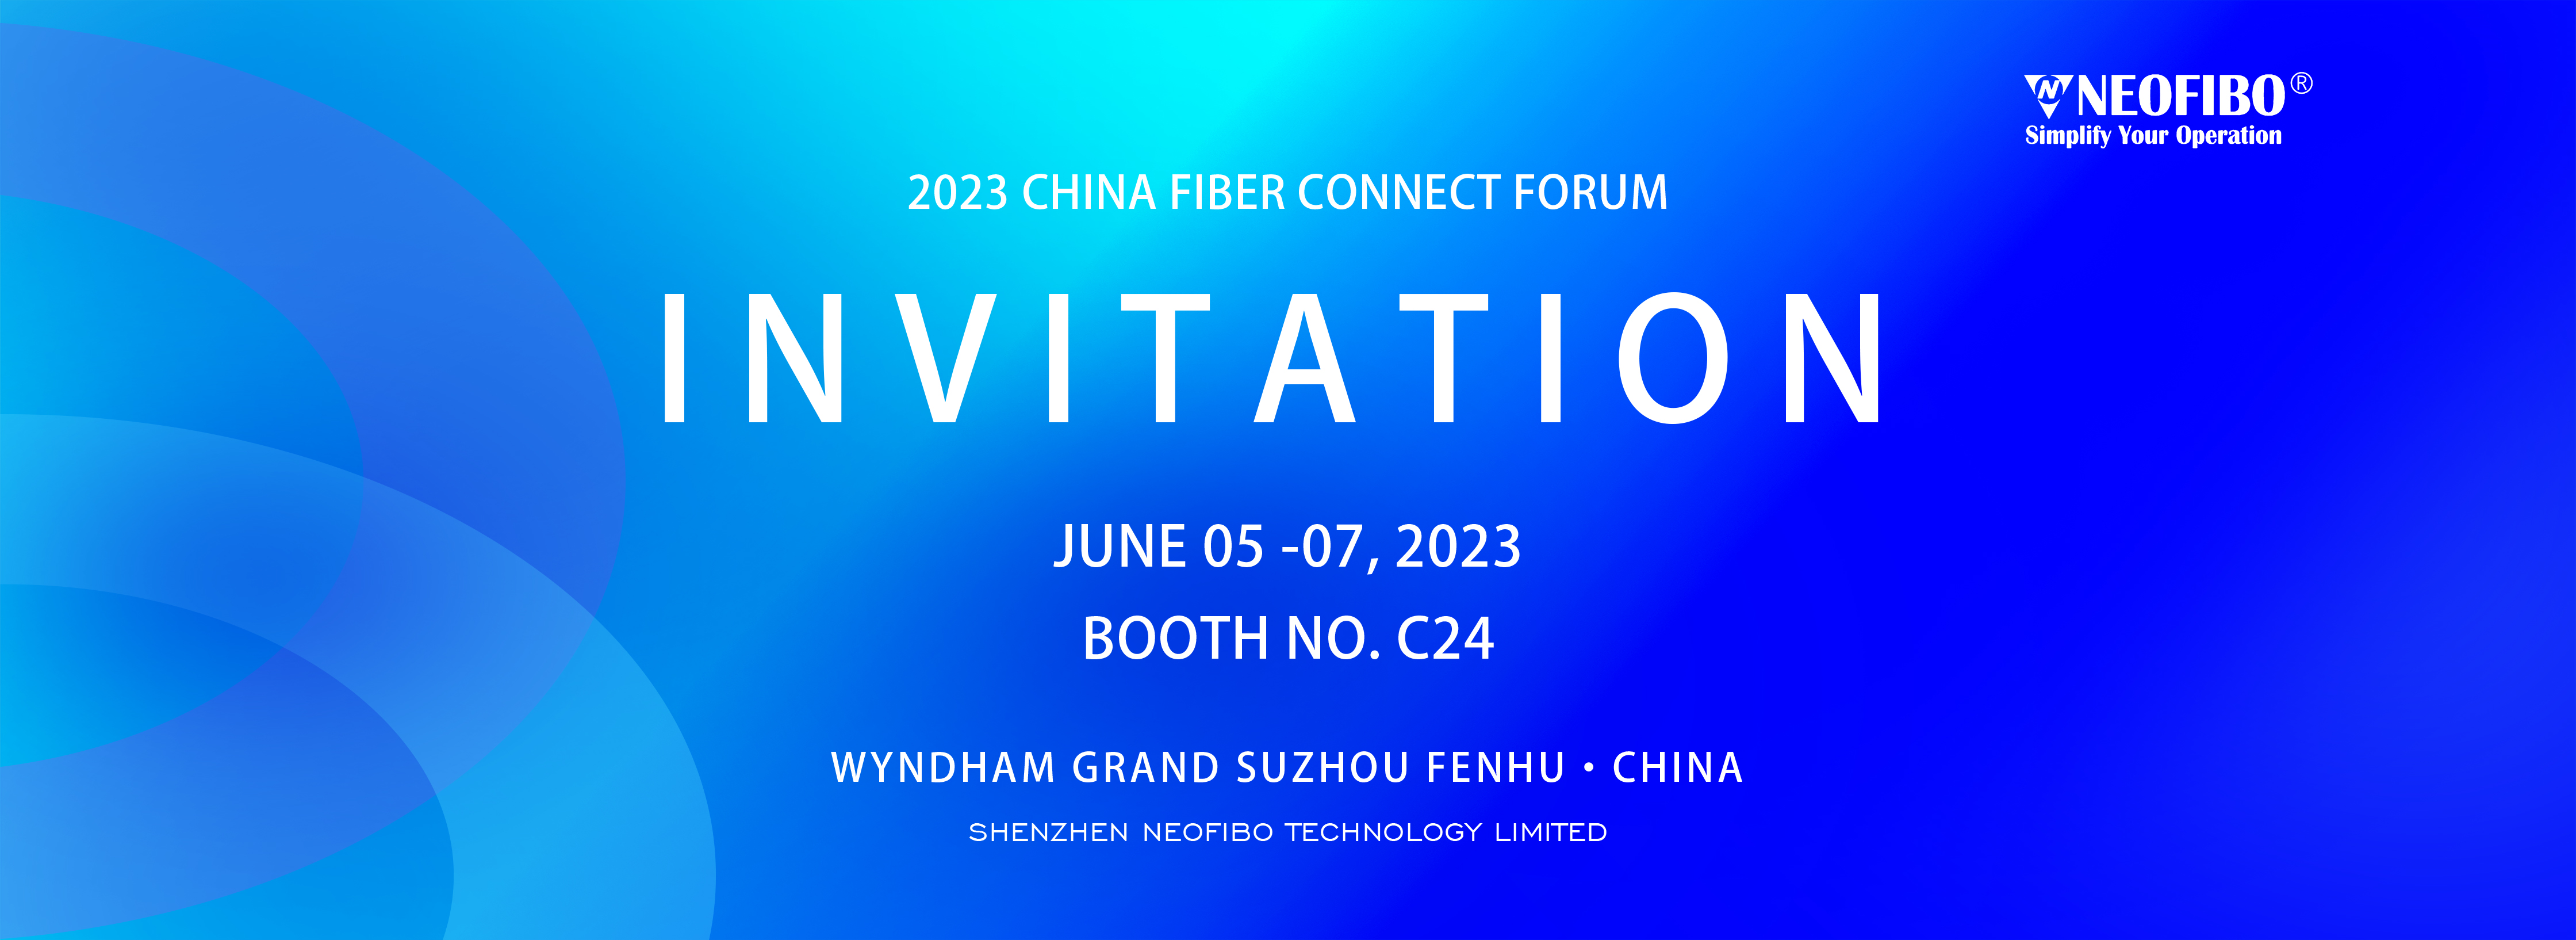 2023 CHINA FIBER CONNECT FORUM